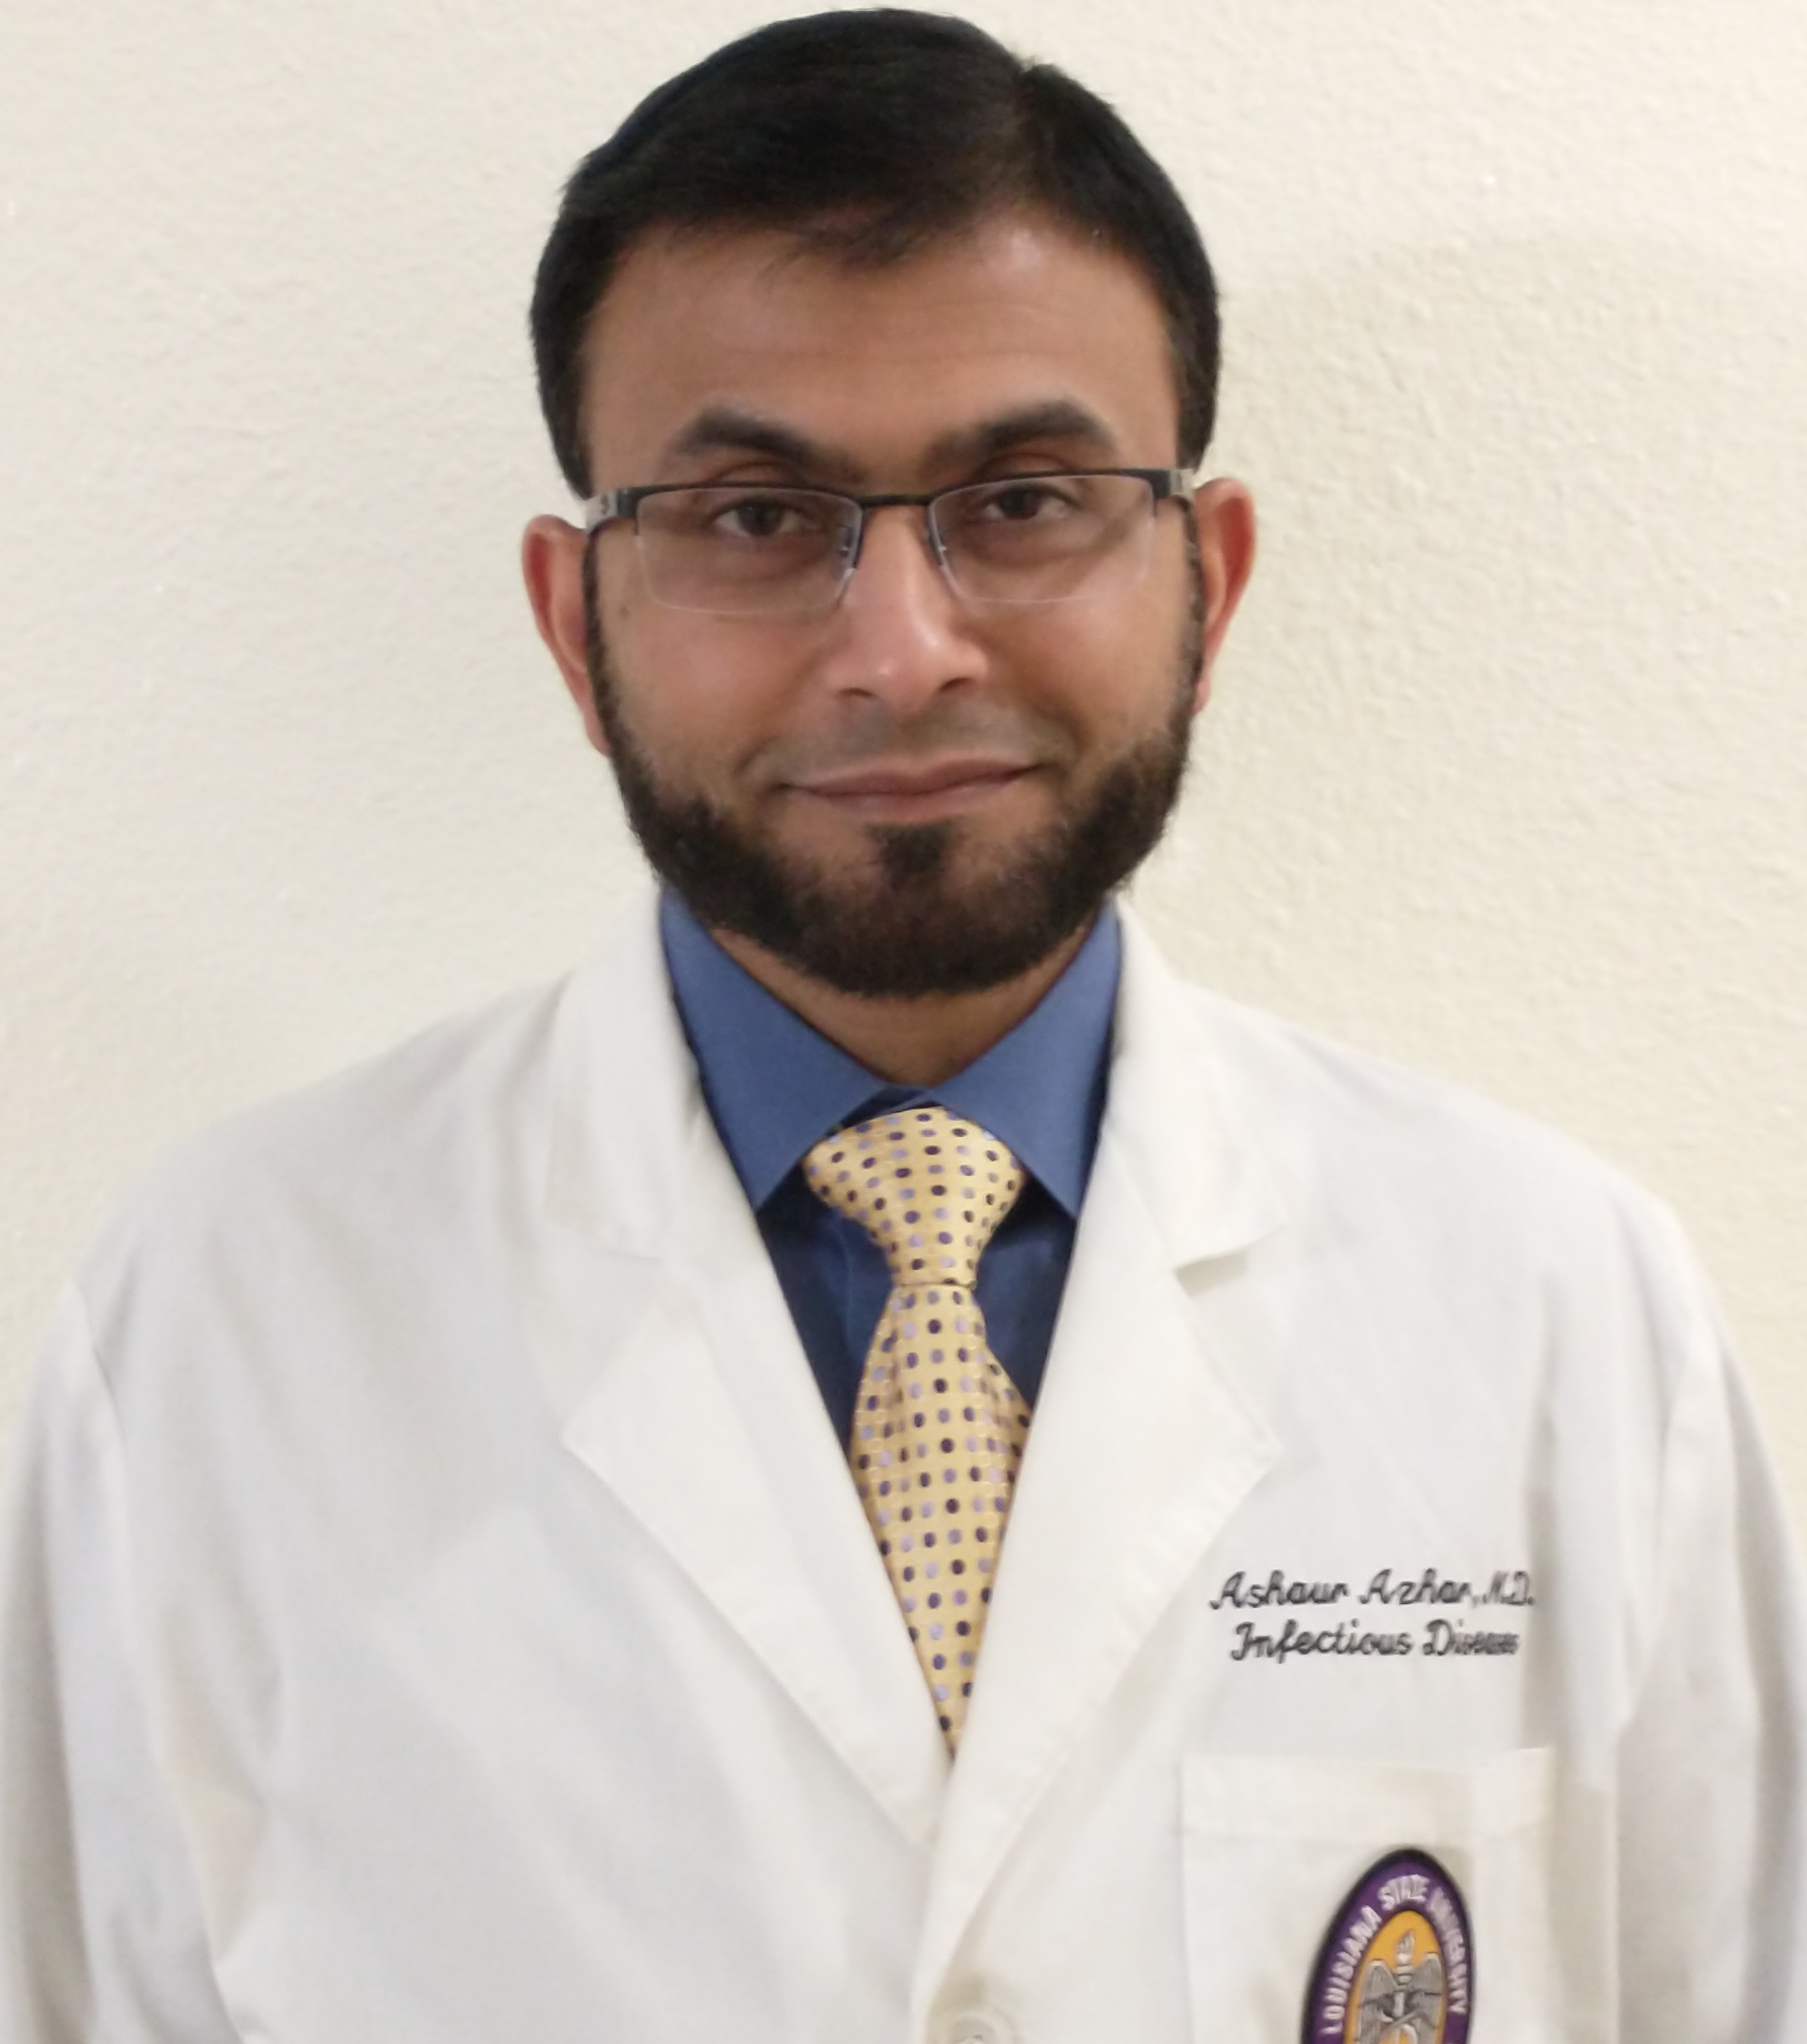 Dr. Ashaur Azhar - LSU Department of Medicine